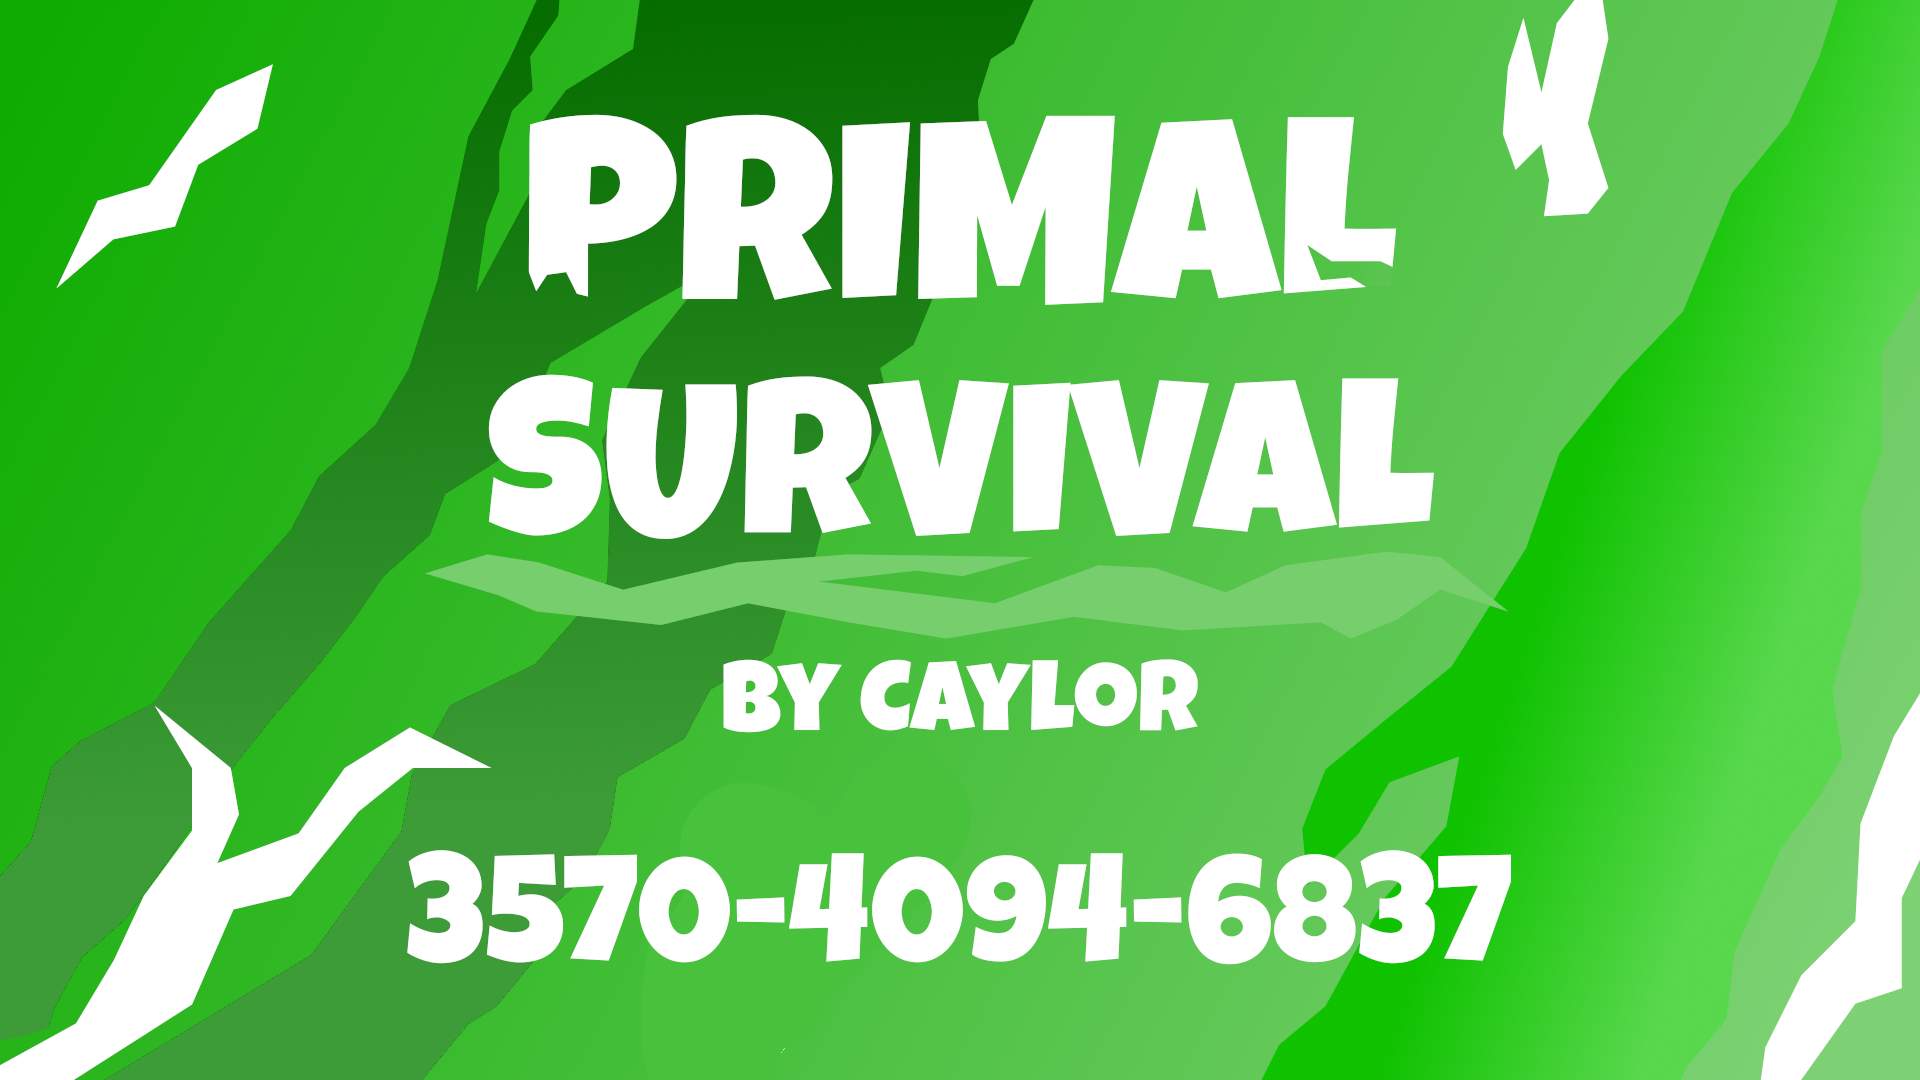 CAYLORS PRIMAL SURVIVAL